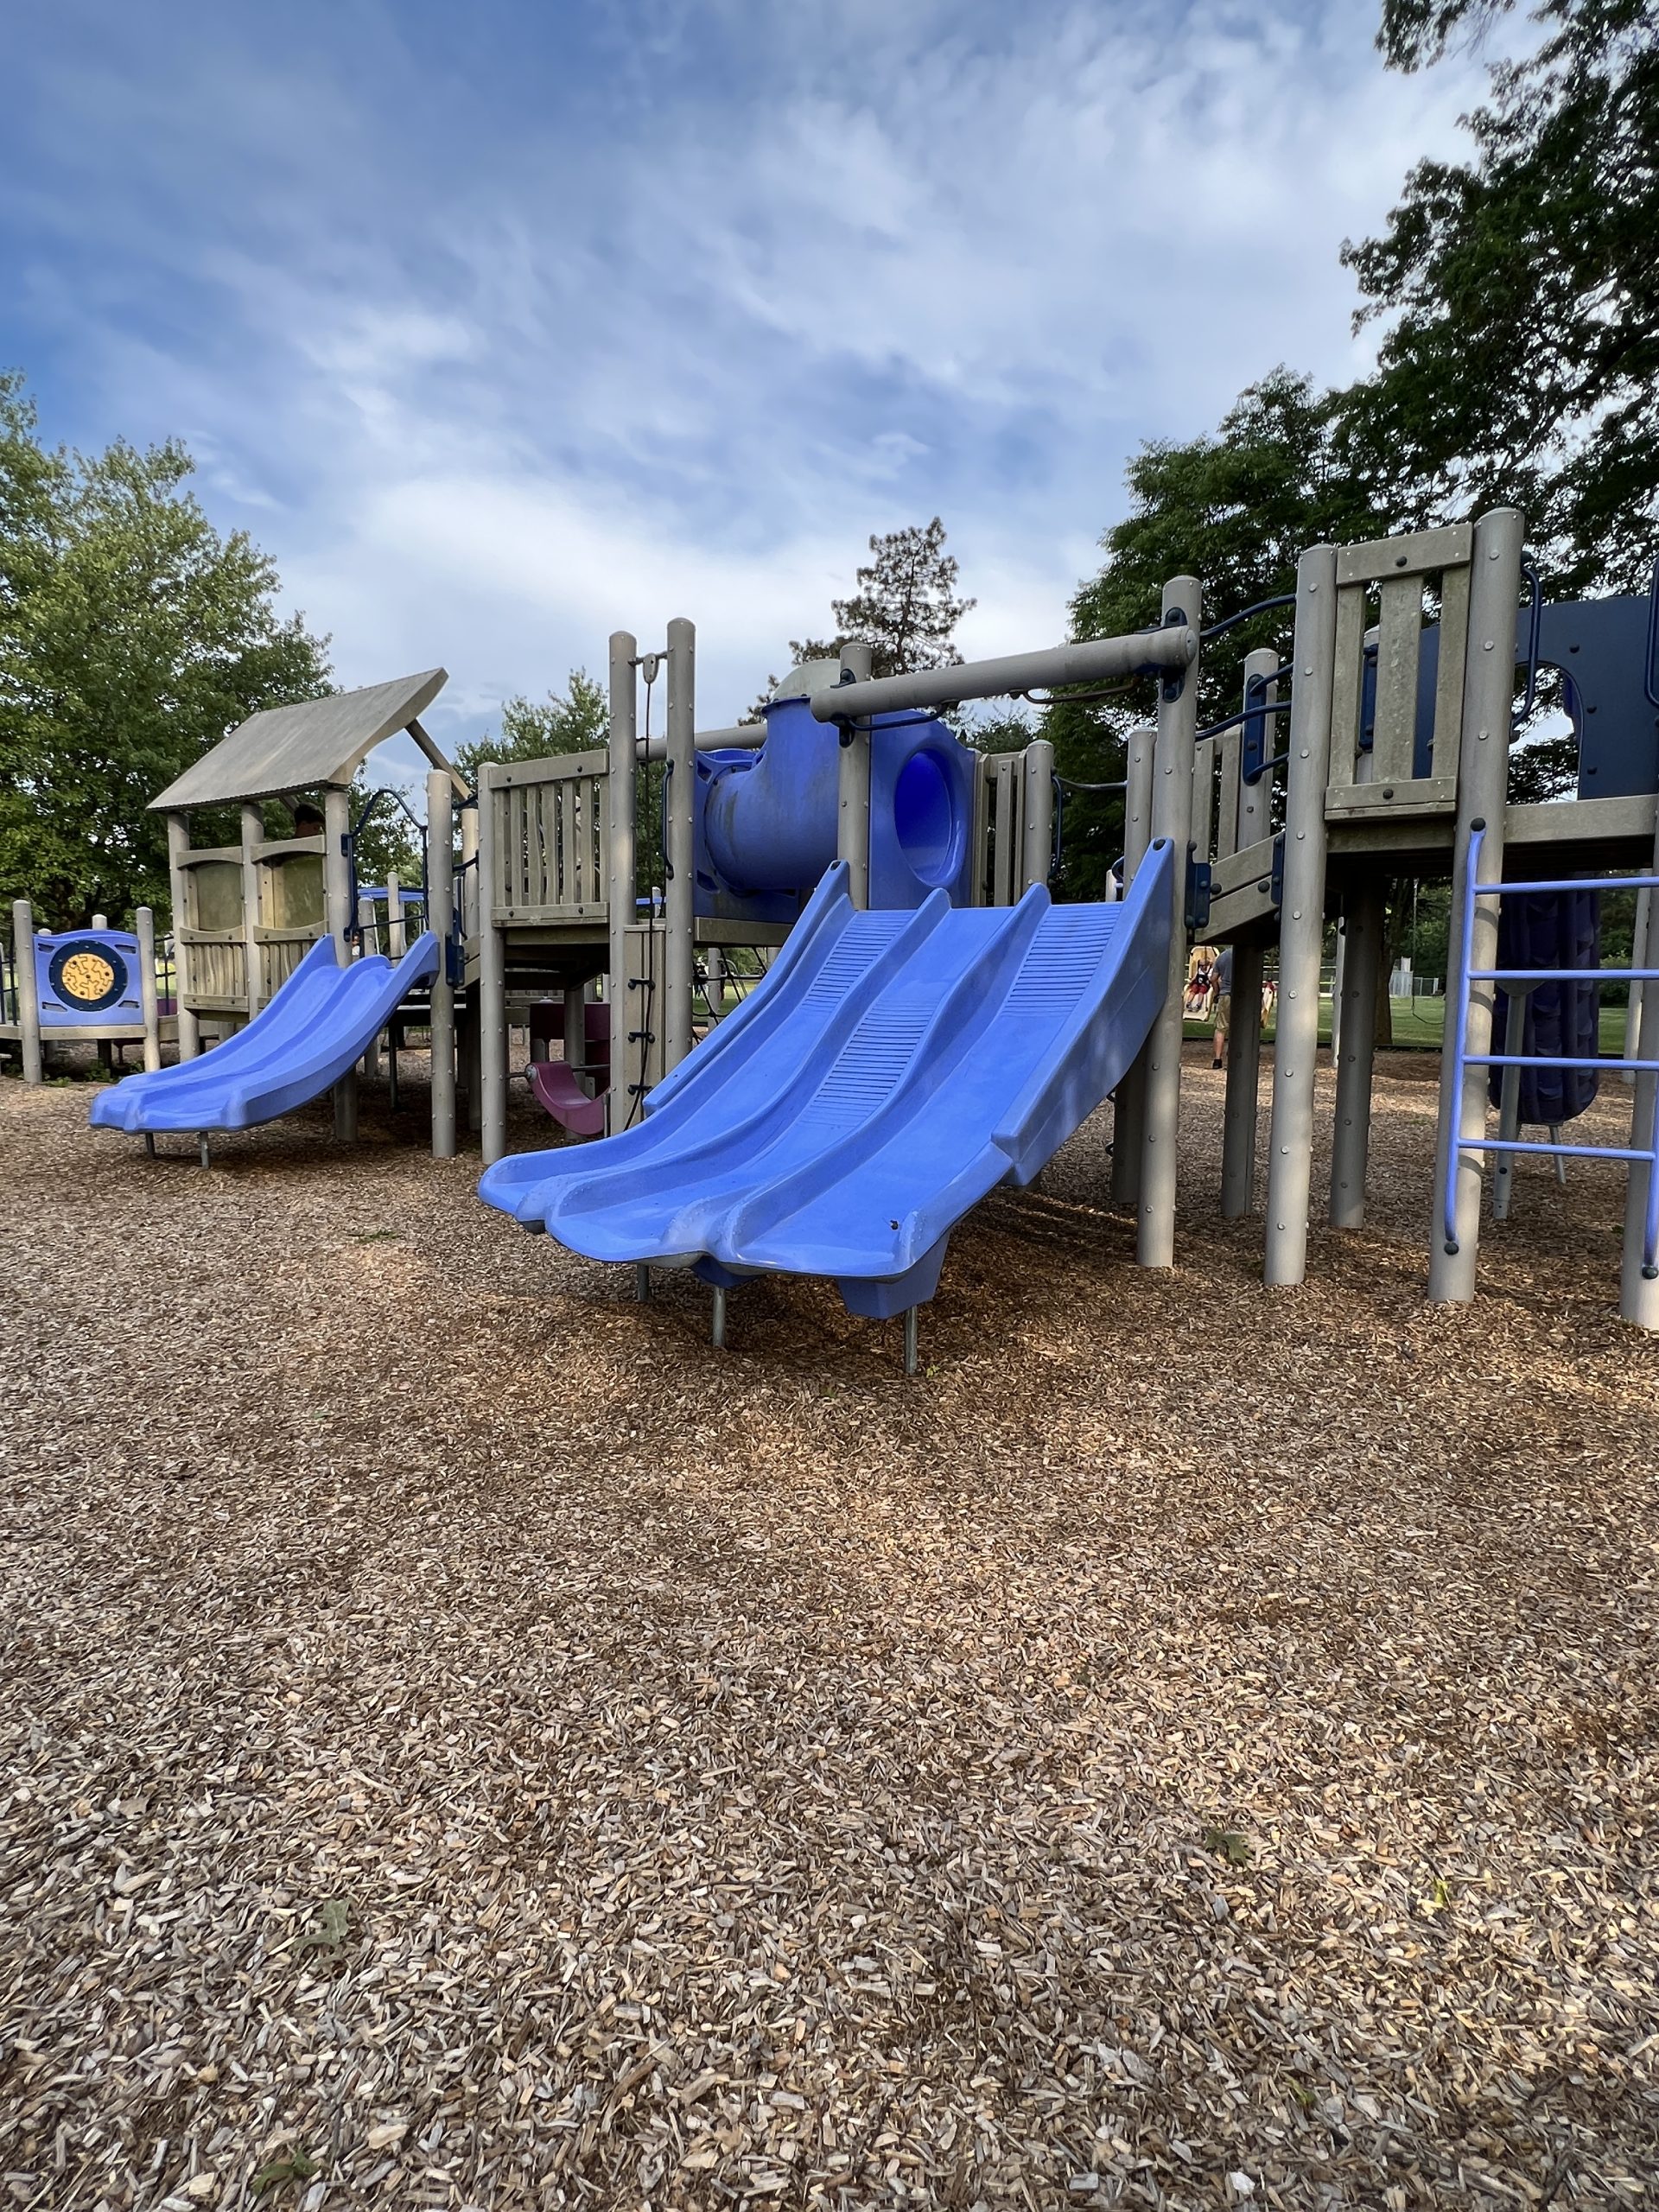 North Branch Park Playground in Bridgewater NJ - SLIDES - Short side by side slides 3 paths